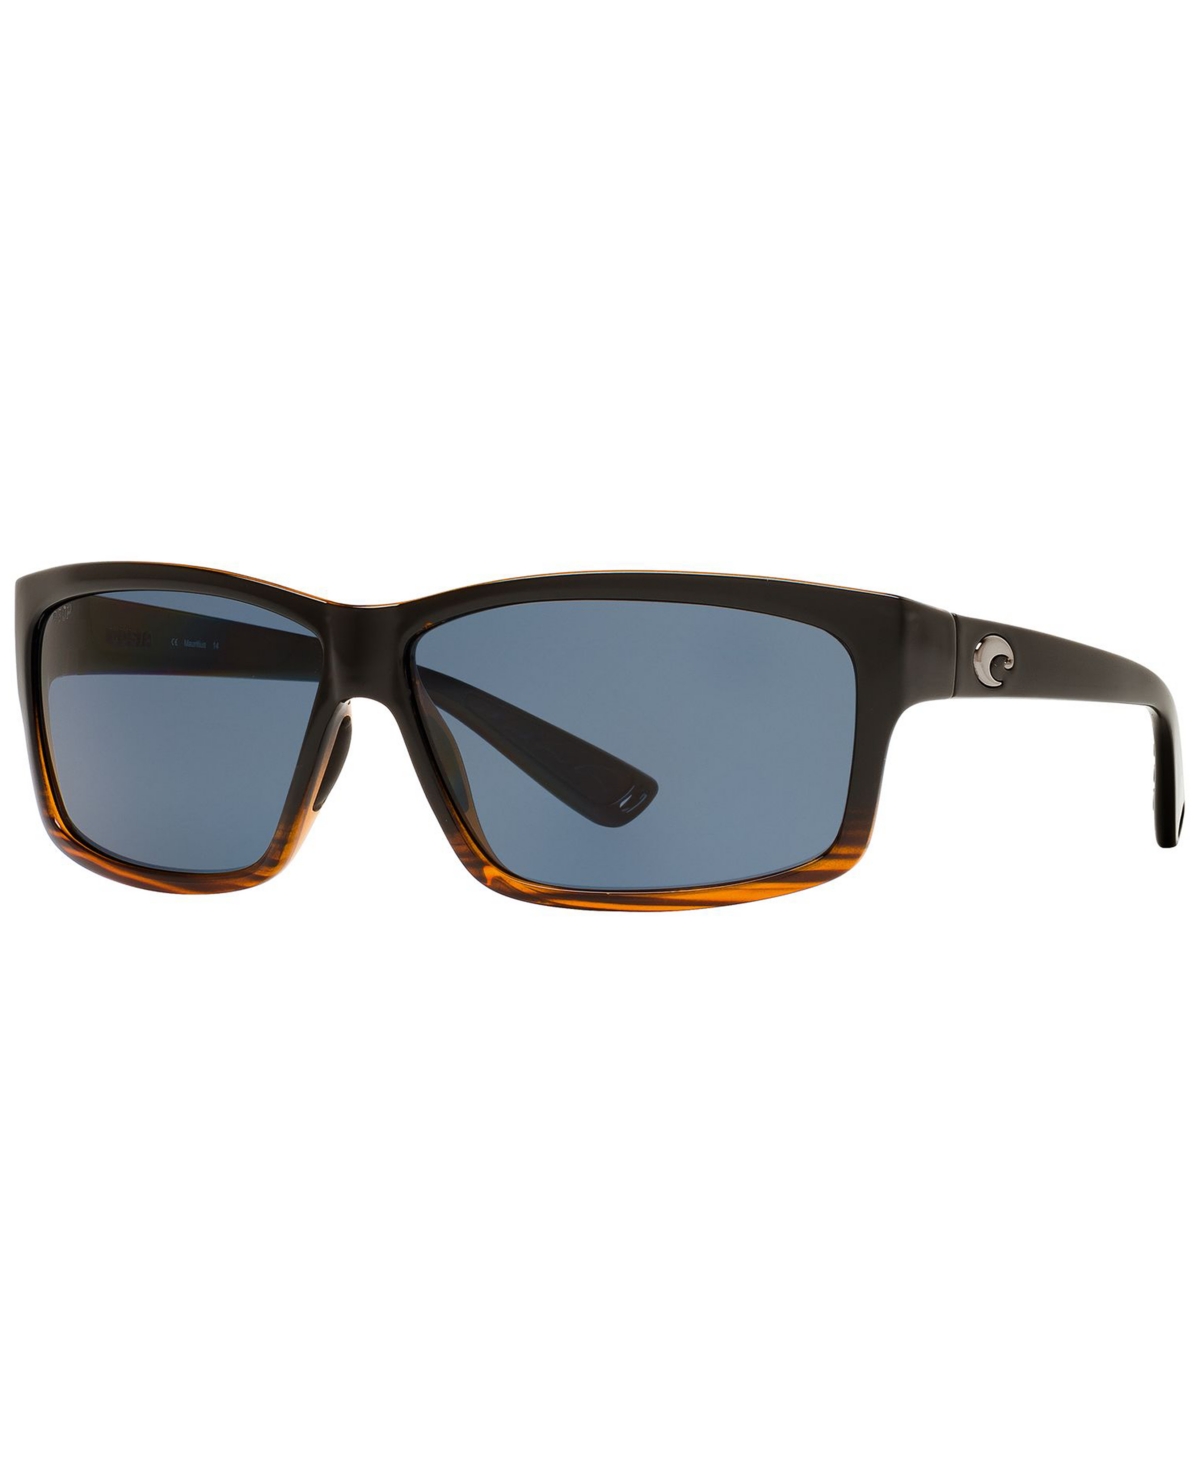 Polarized Sunglasses, Cut Polarized 60P - BROWN/ GOLD